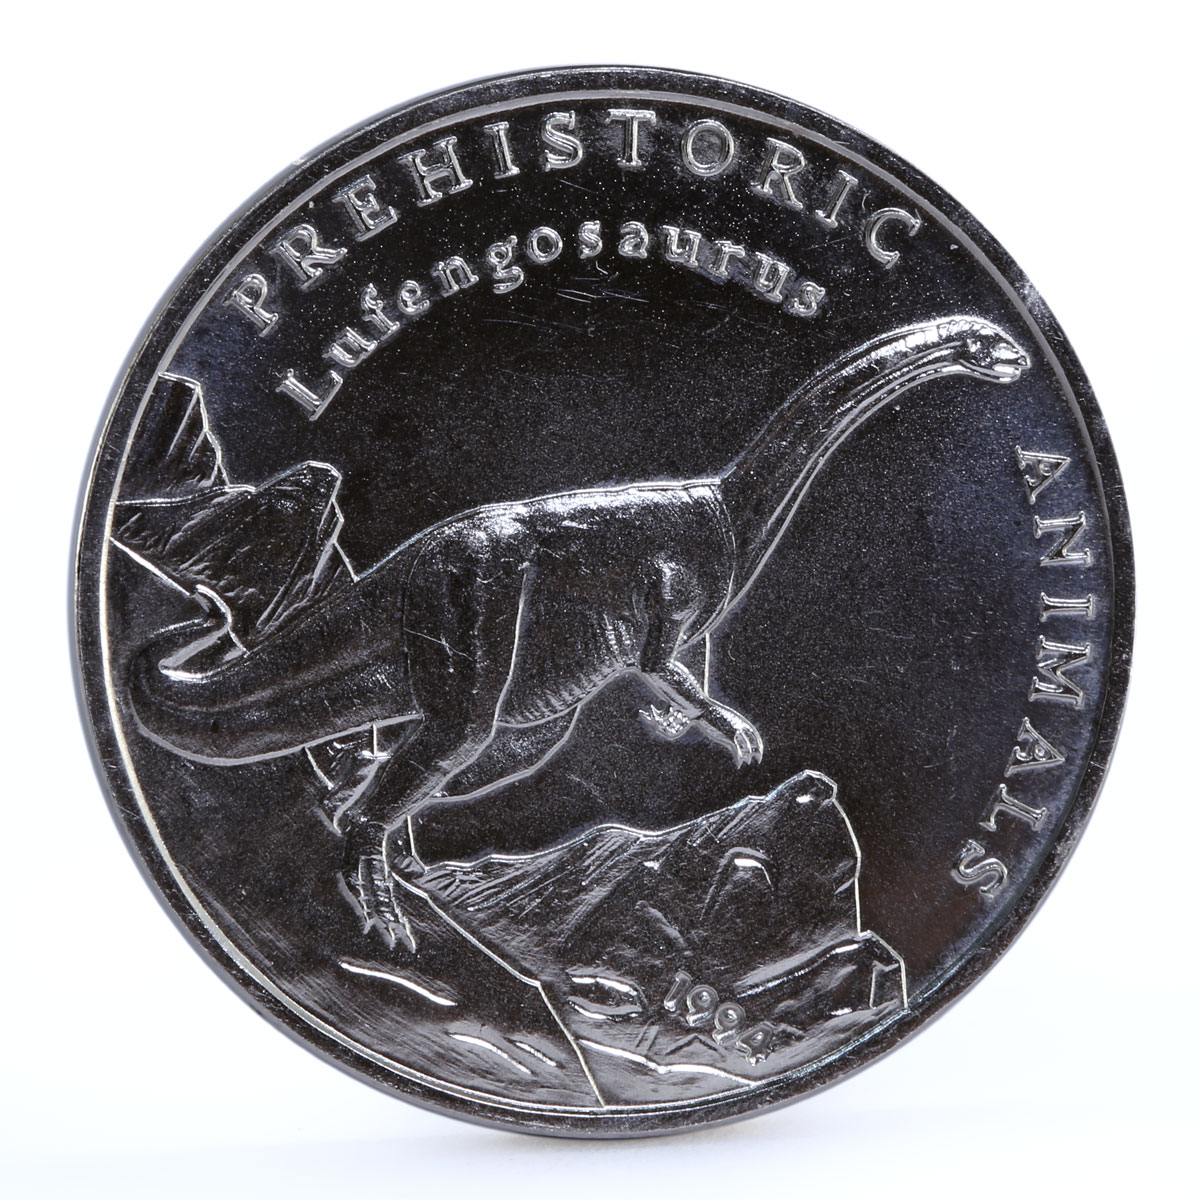 Laos 10 kip Prehistoric Animals Lufengosaurus Dinosaur CuNi coin 1994